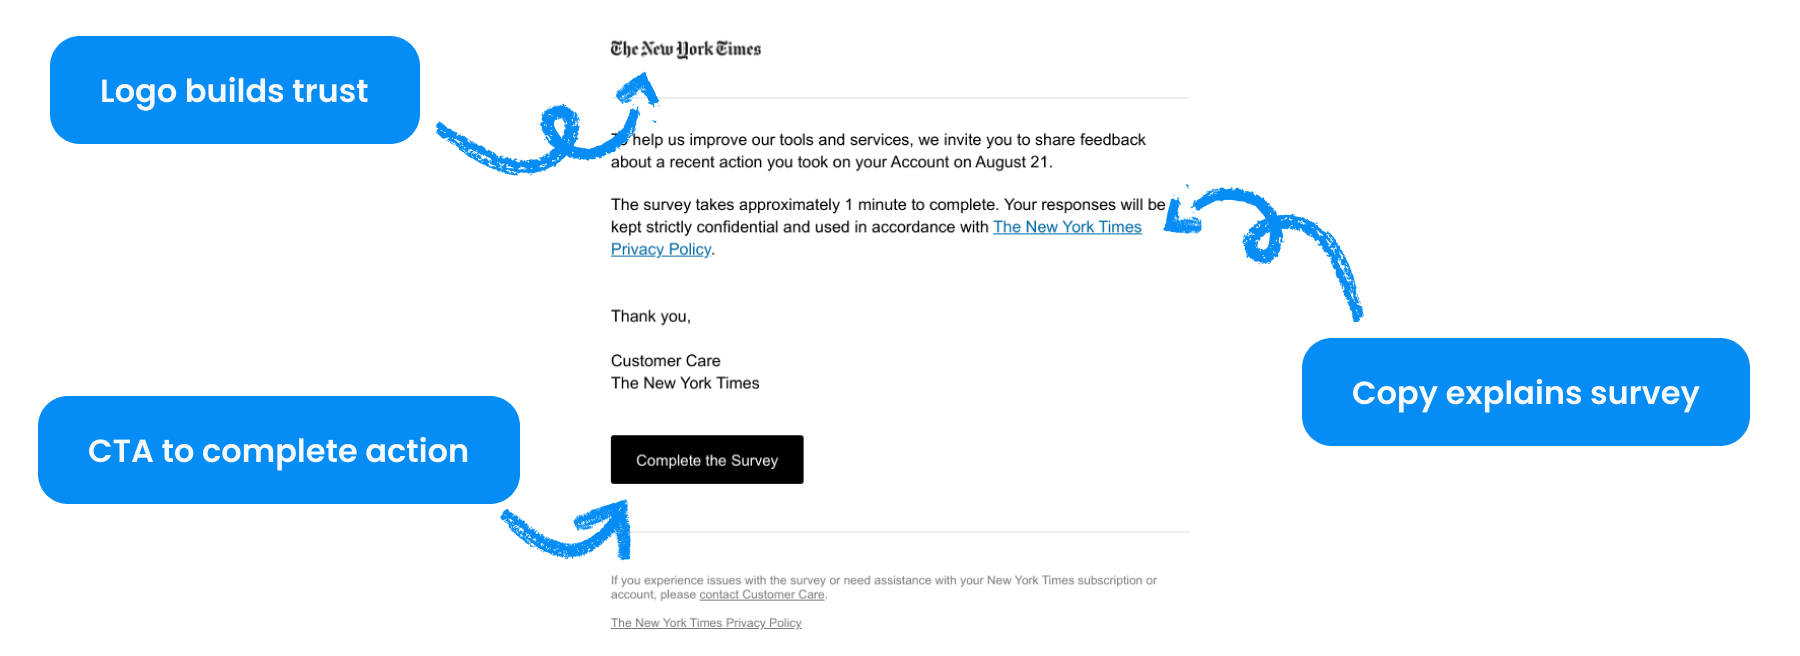 Anatomy-The New York Times